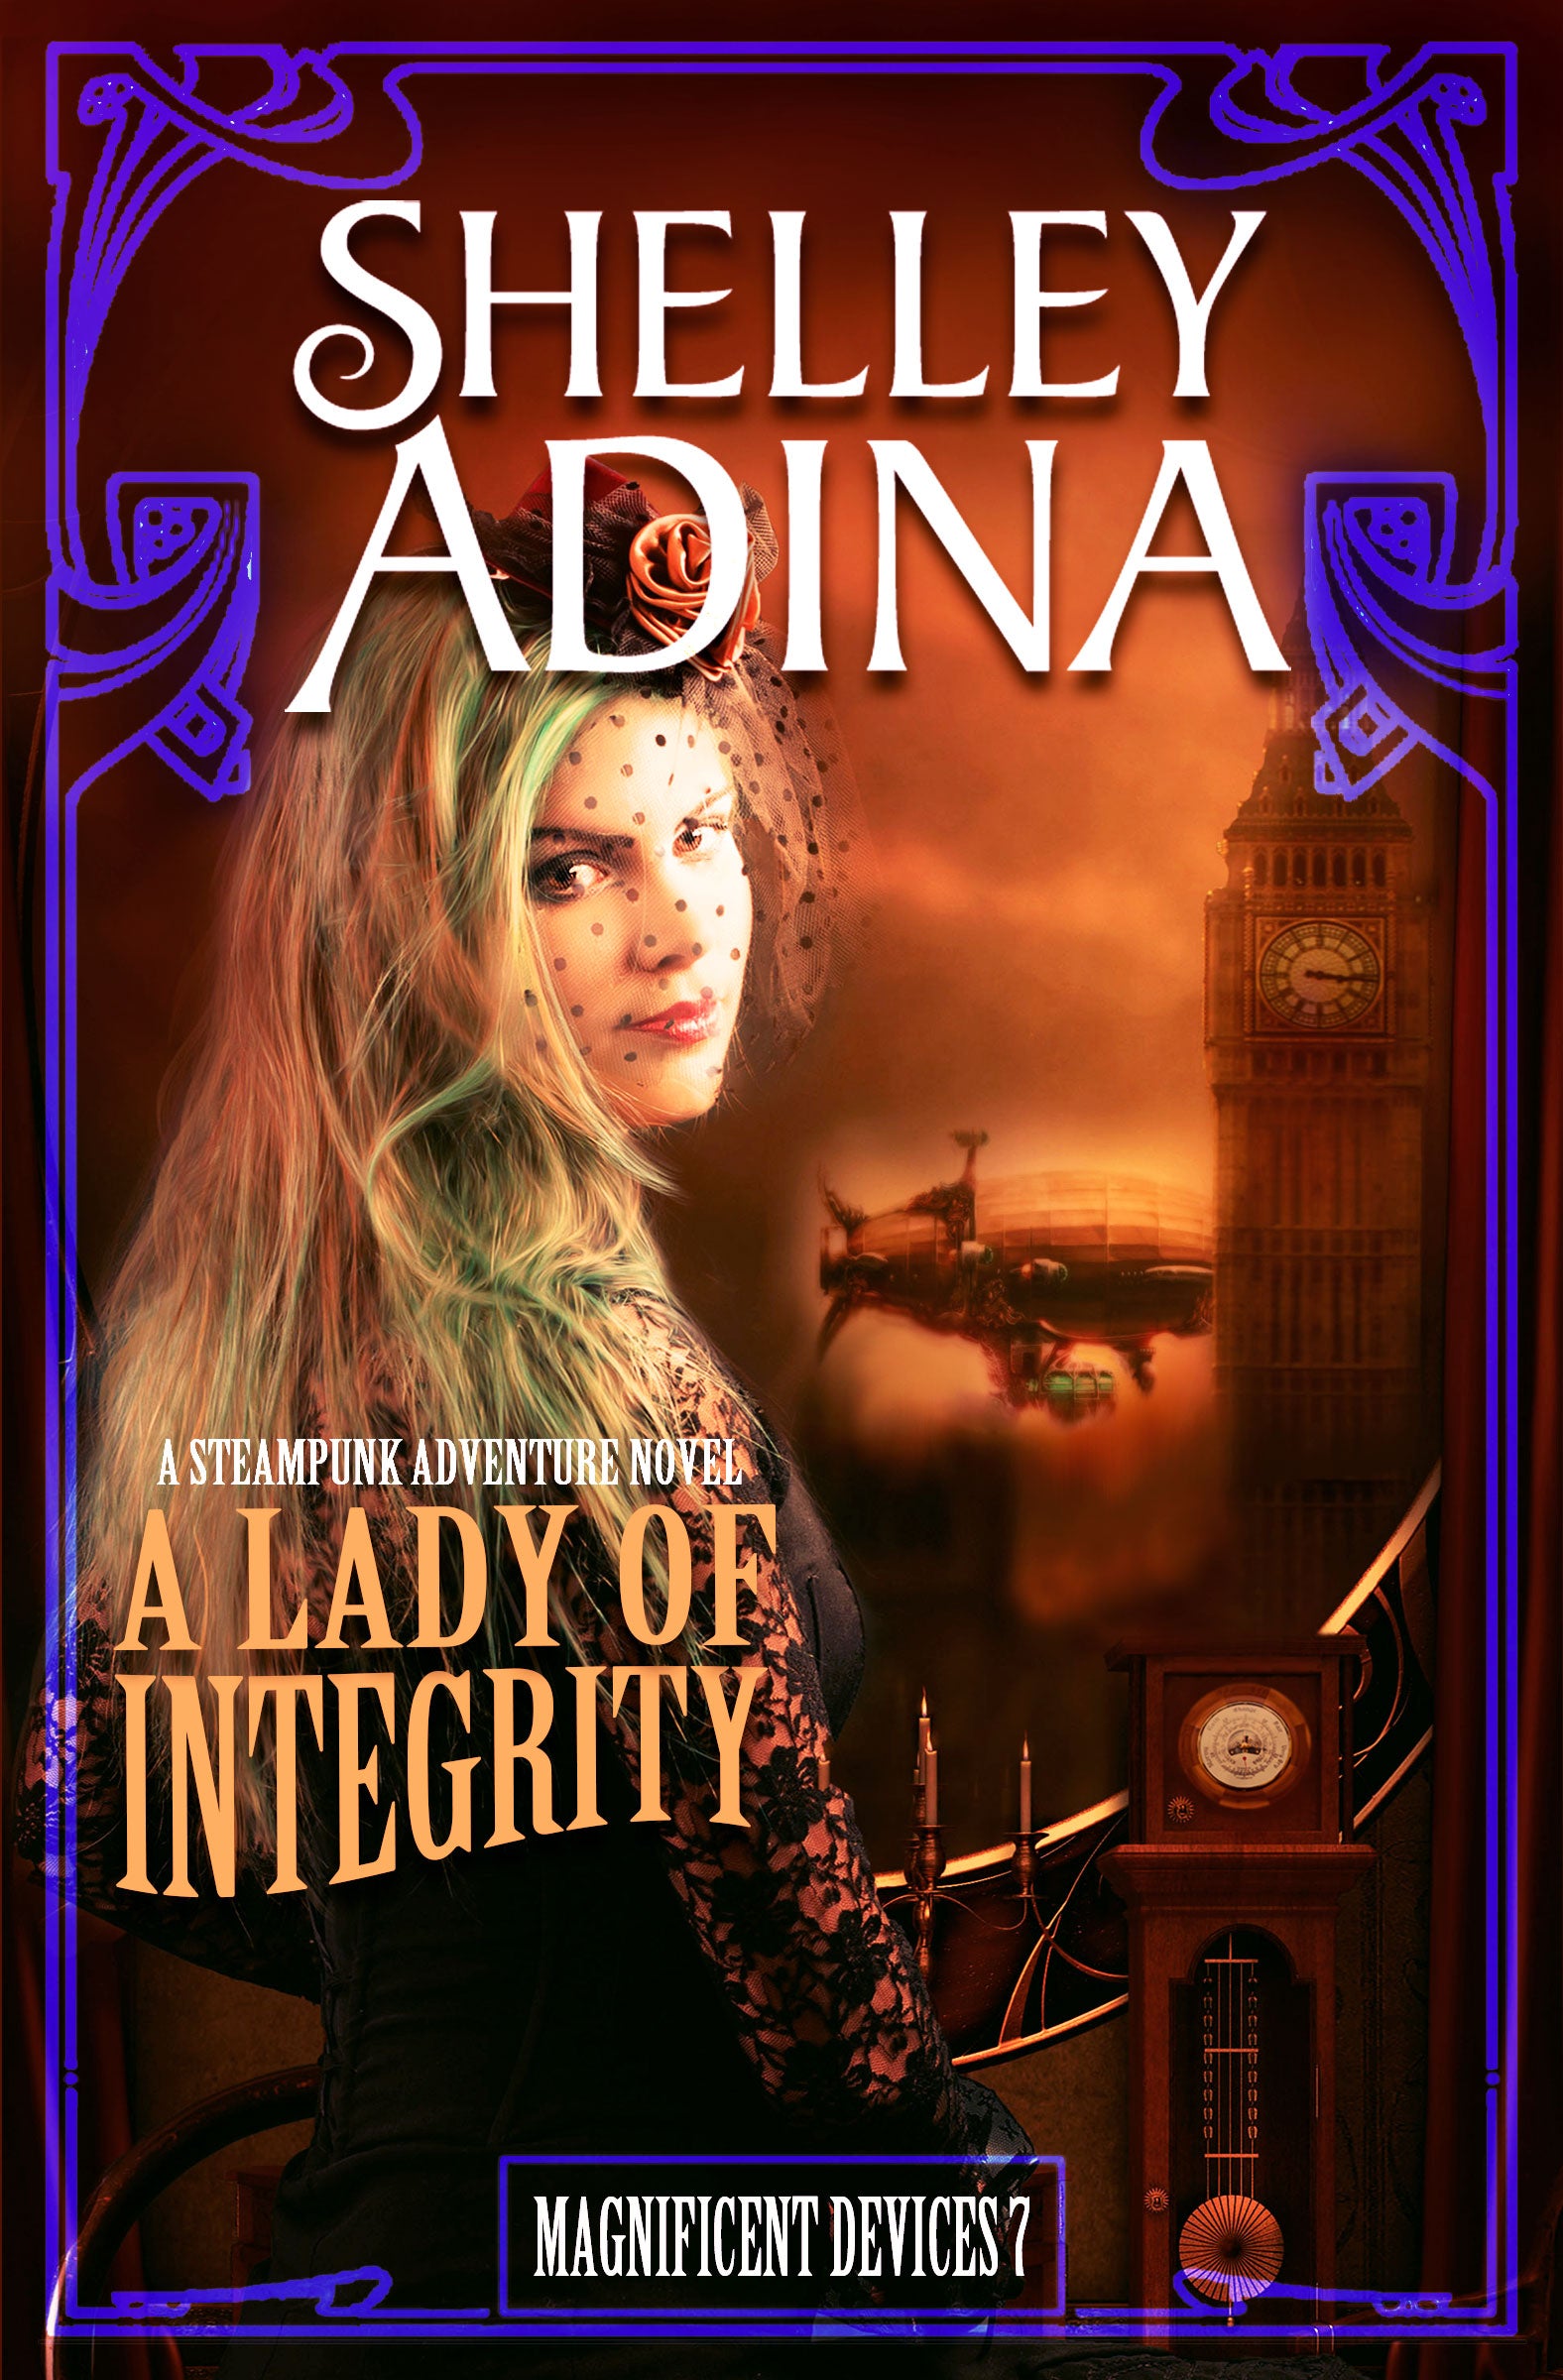 A Lady of Integrity written by Shelley Adina